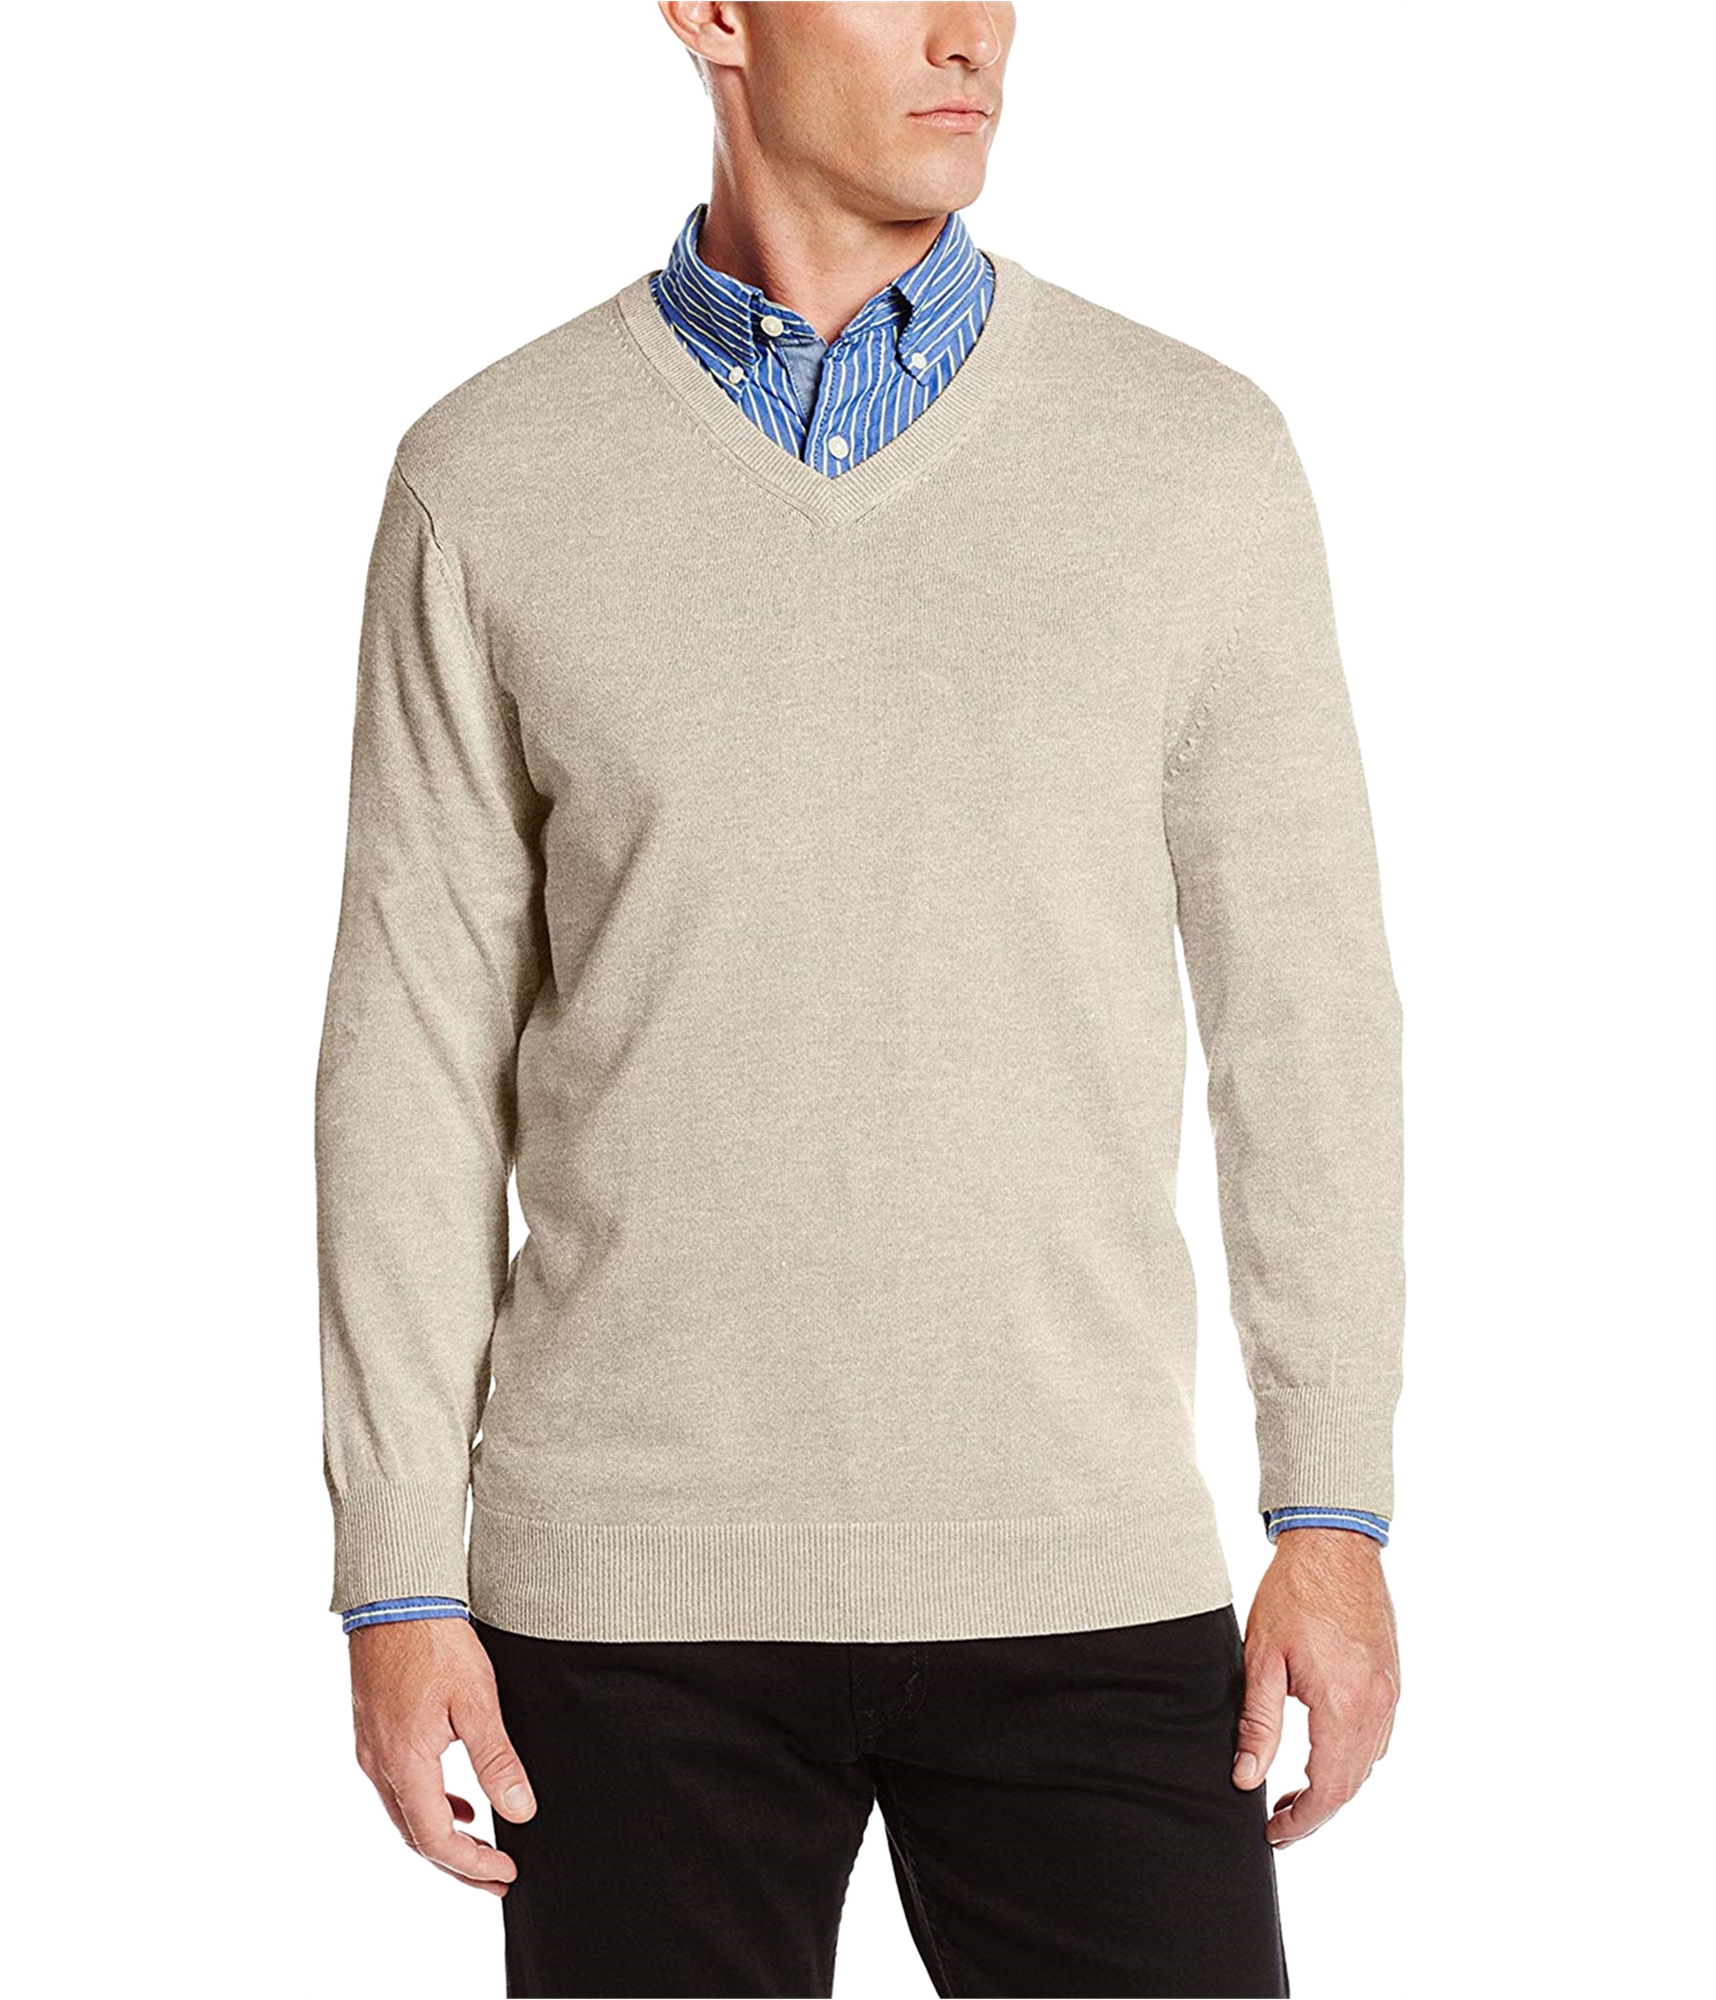 IZOD Mens V-Neck Pullover Sweater, Beige, Small 676108343587 | eBay